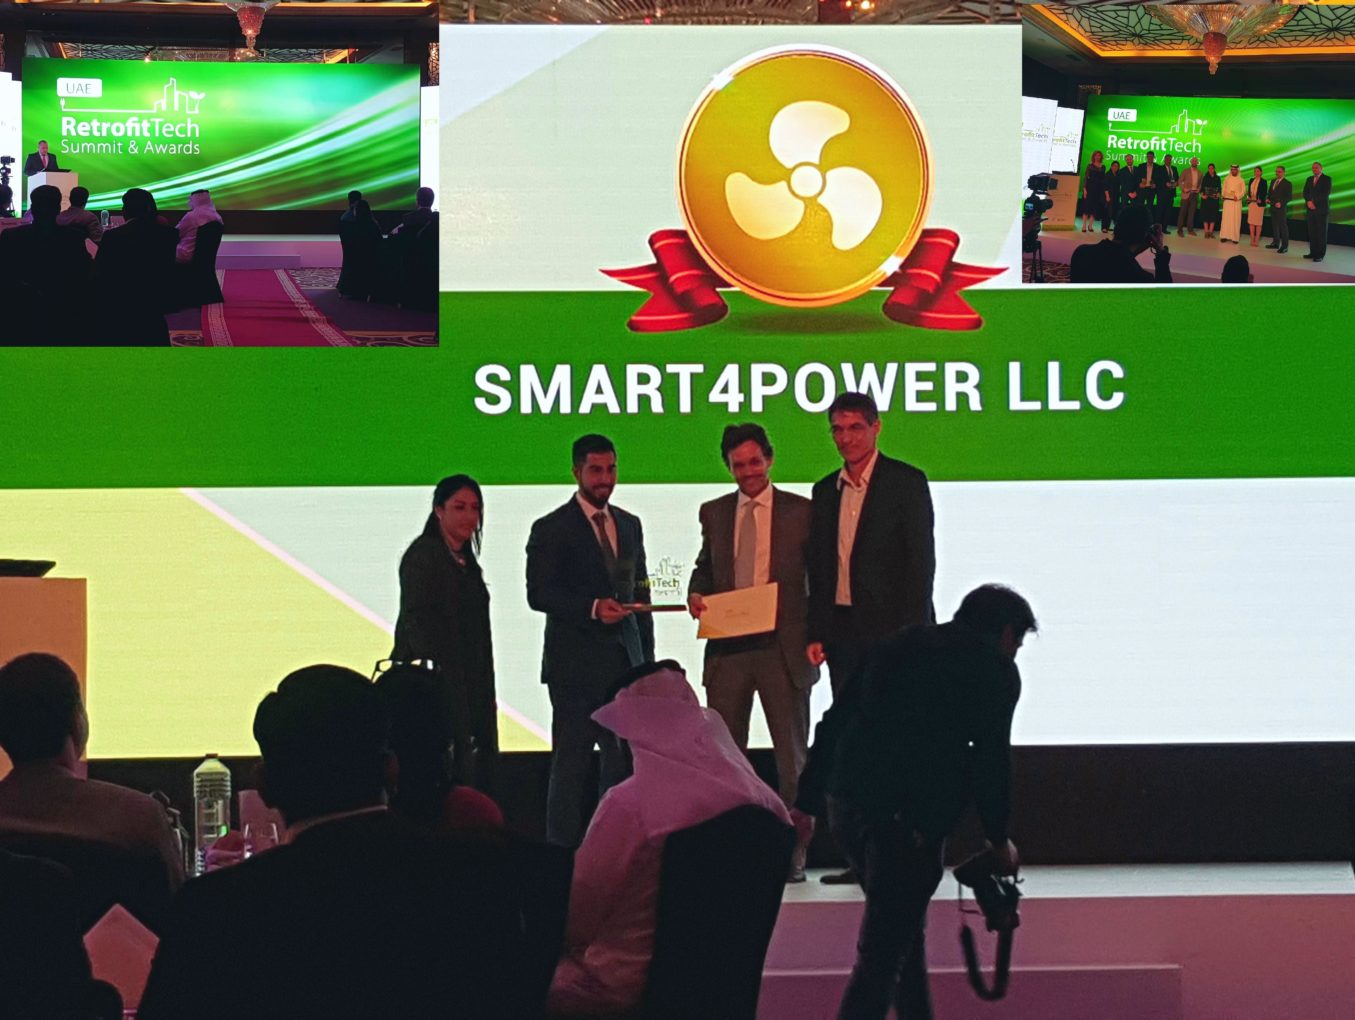 Smart4power wins big at Retrofitech awards 2017